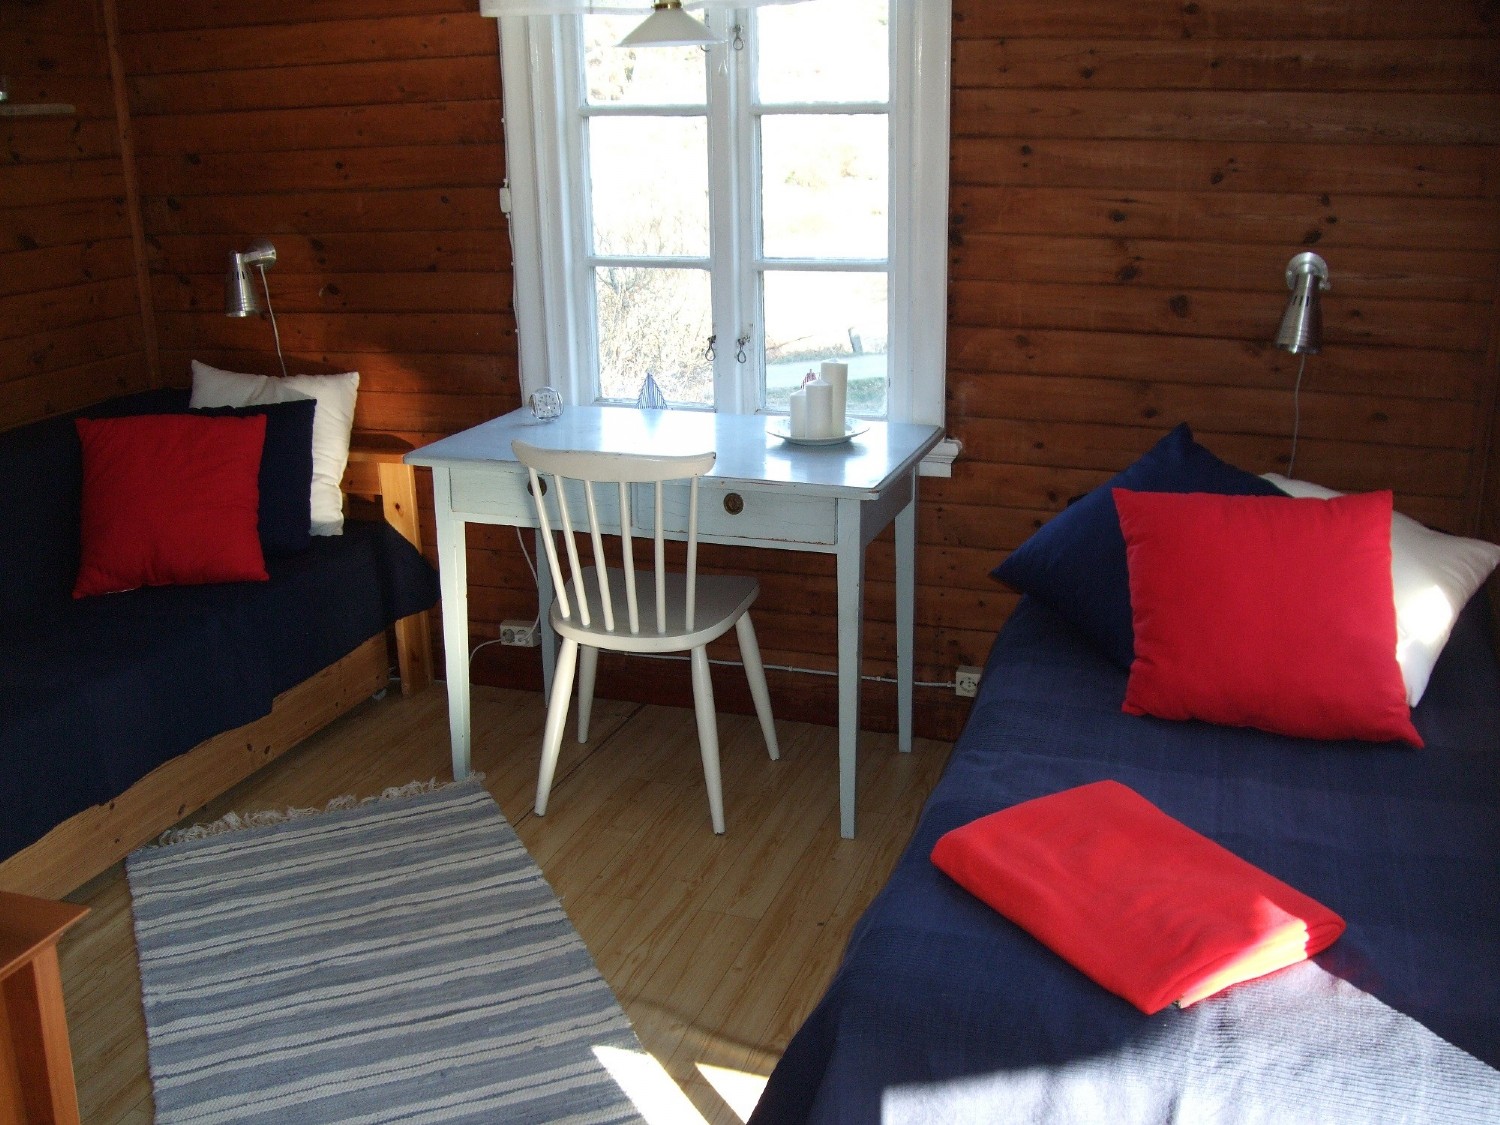 Sovrum med 1 enkel och 1 dubbelsng/ Bedroom with 1 single and 1 doble bed 